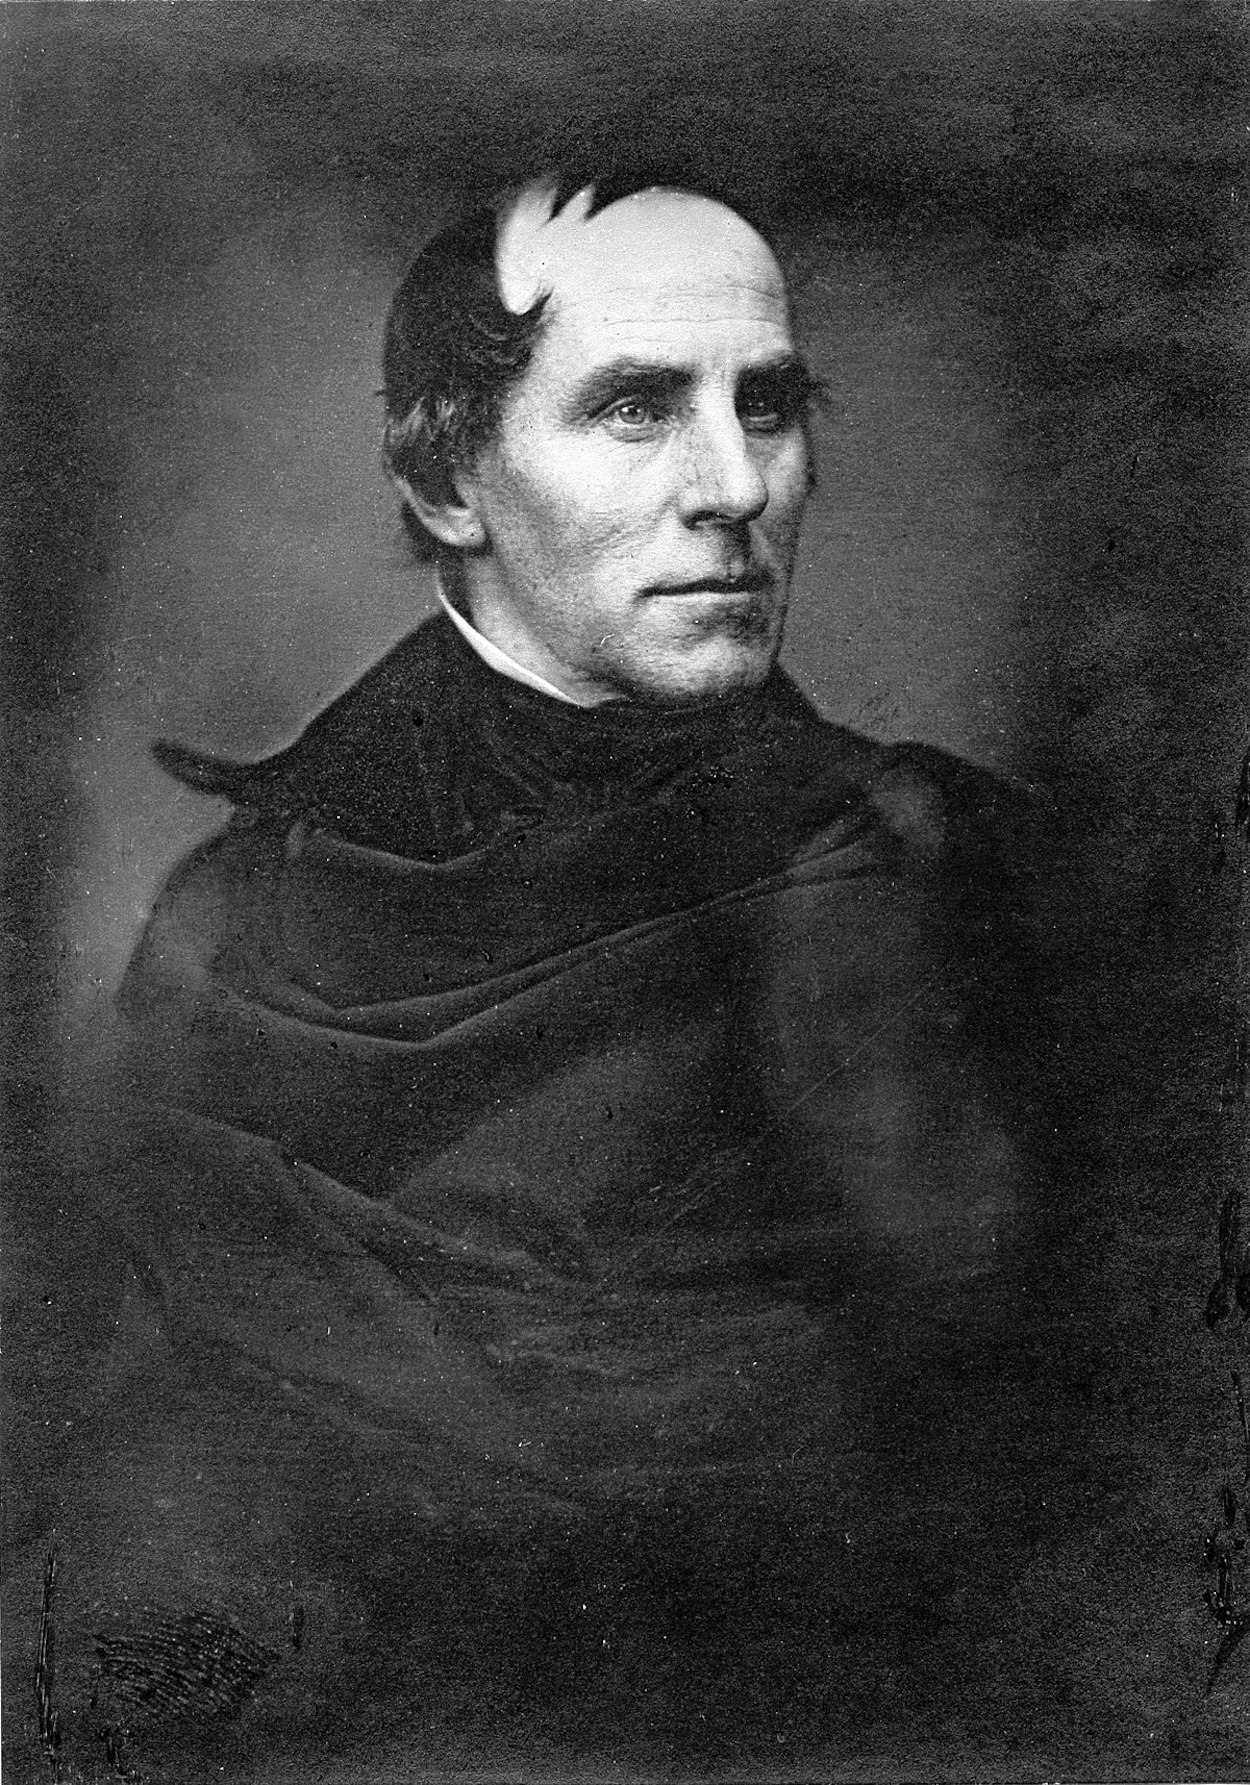 Thomas Cole - 1er février 1801 - 11 février 1848